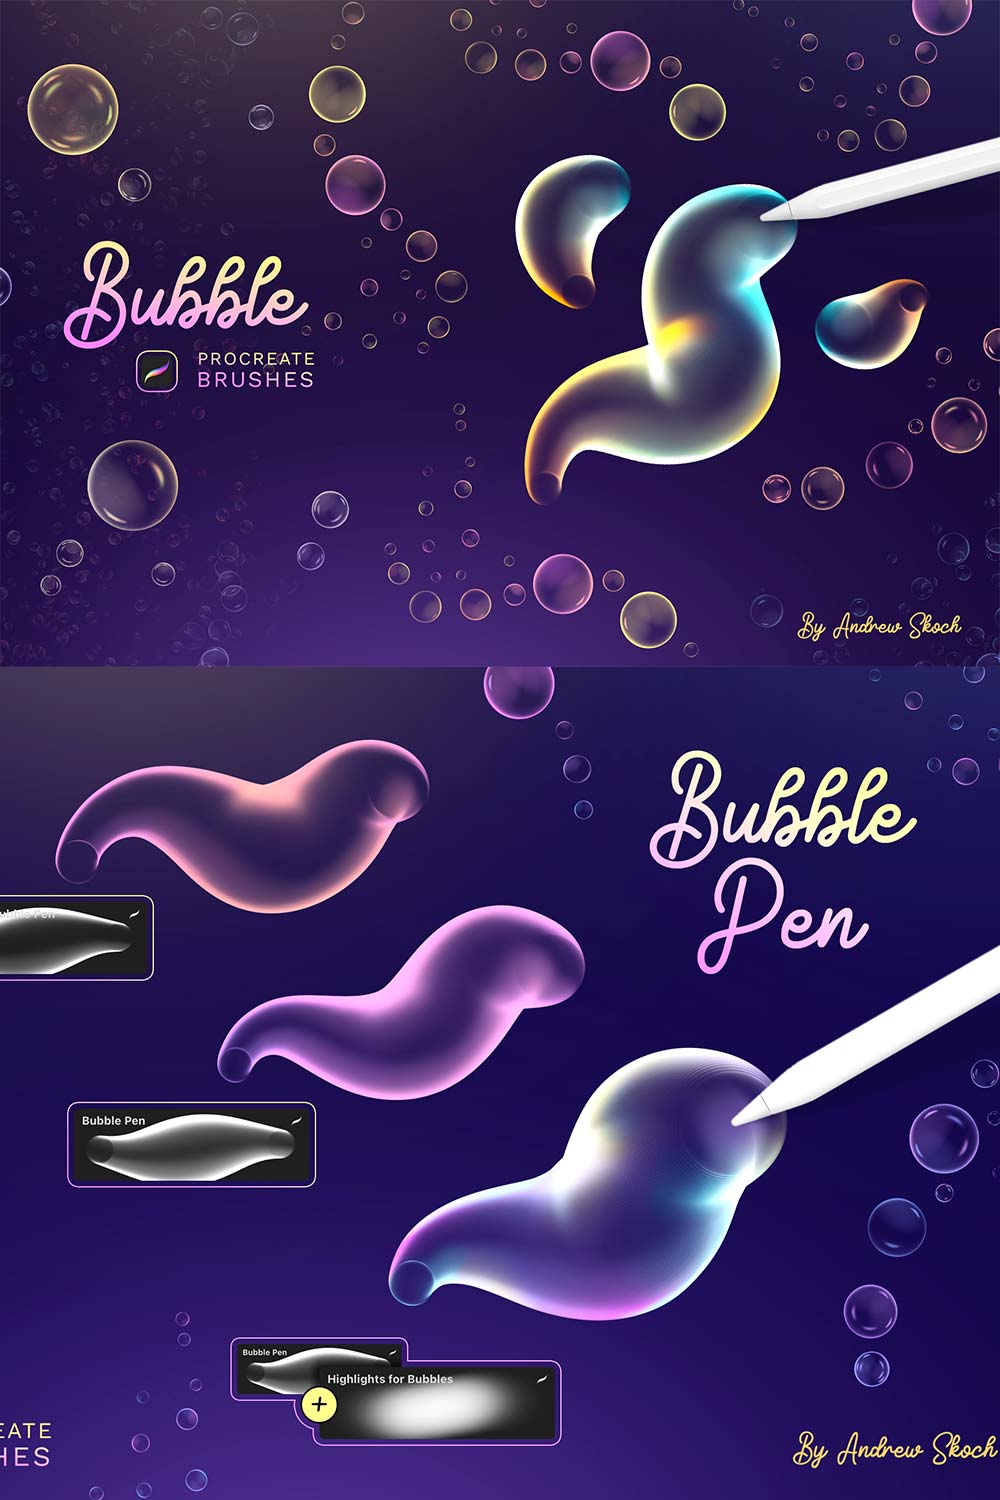 Bubbles Procreate Brushes pinterest preview image.